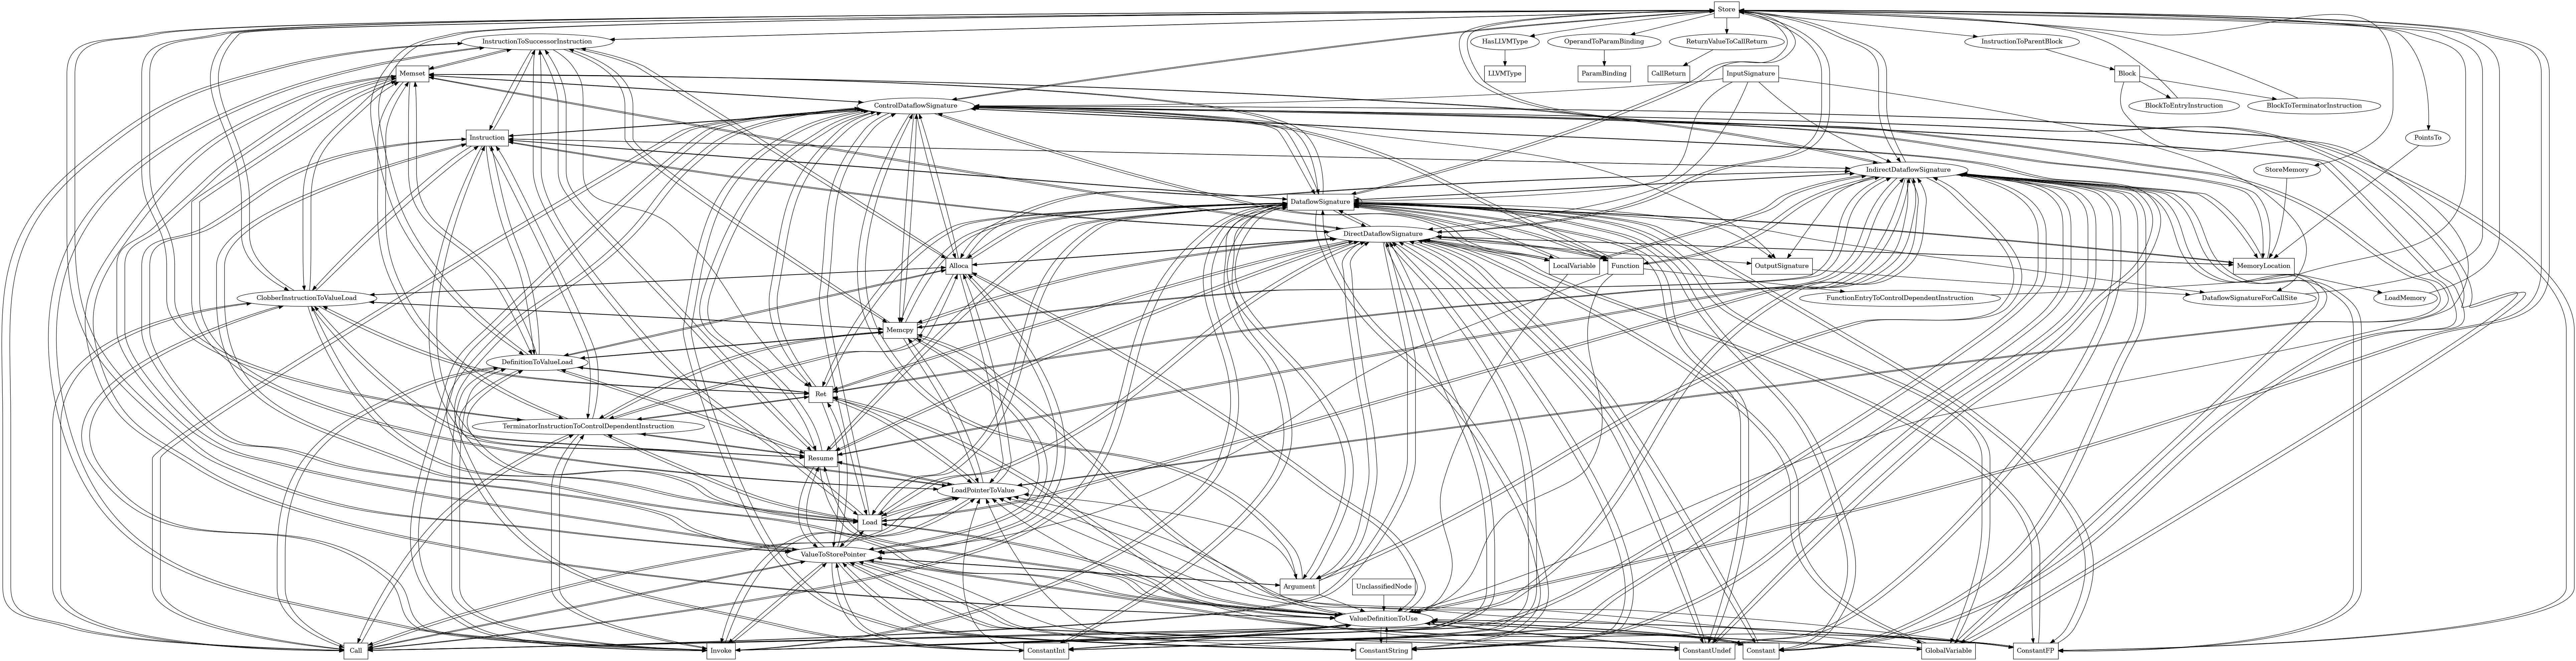 Entity-relationship diagram for Store nodes